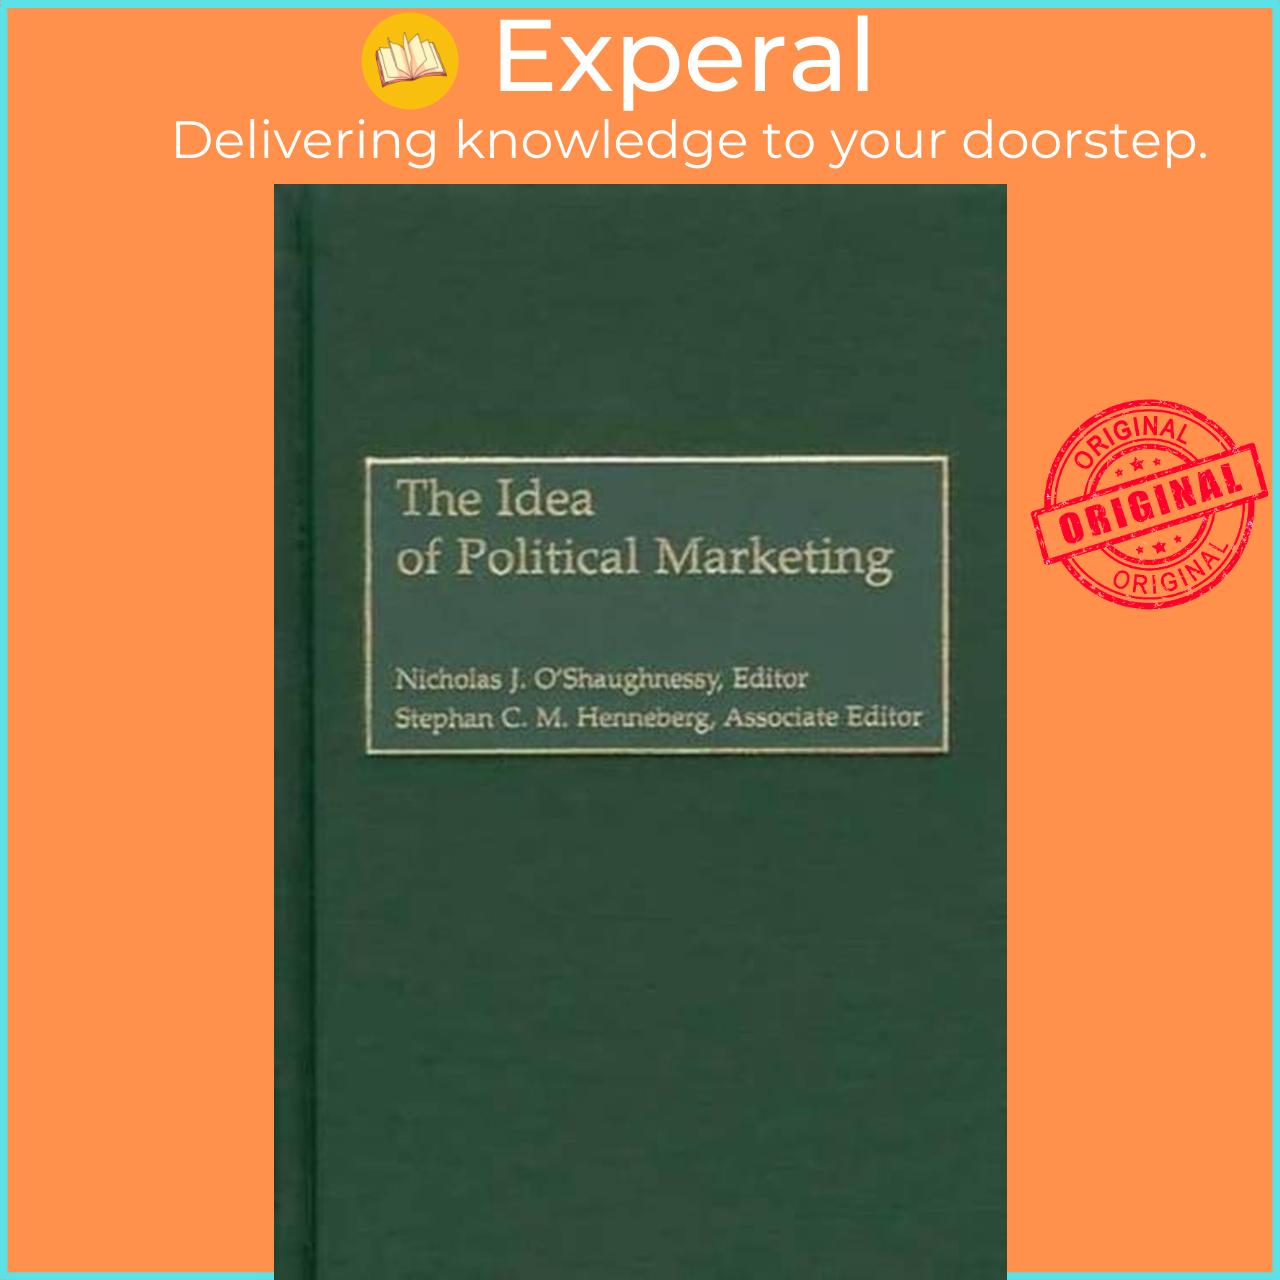 Hình ảnh Sách - The Idea of Political Marketing by Stephan C.M. Henneberg (UK edition, hardcover)